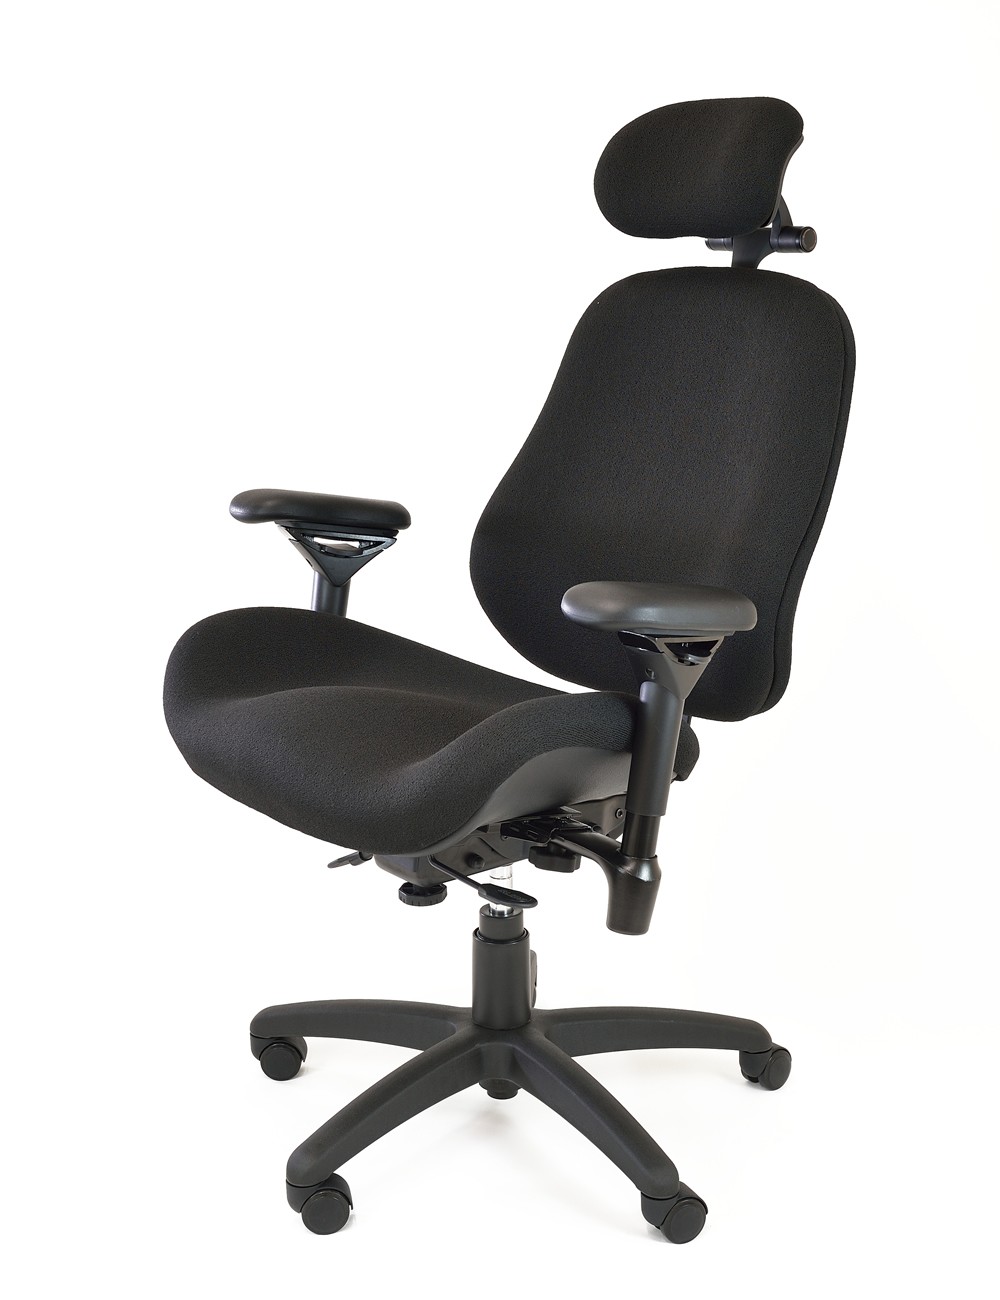 BodyBilt Big and Tall Office Chair J3504 | Heavy Duty ...